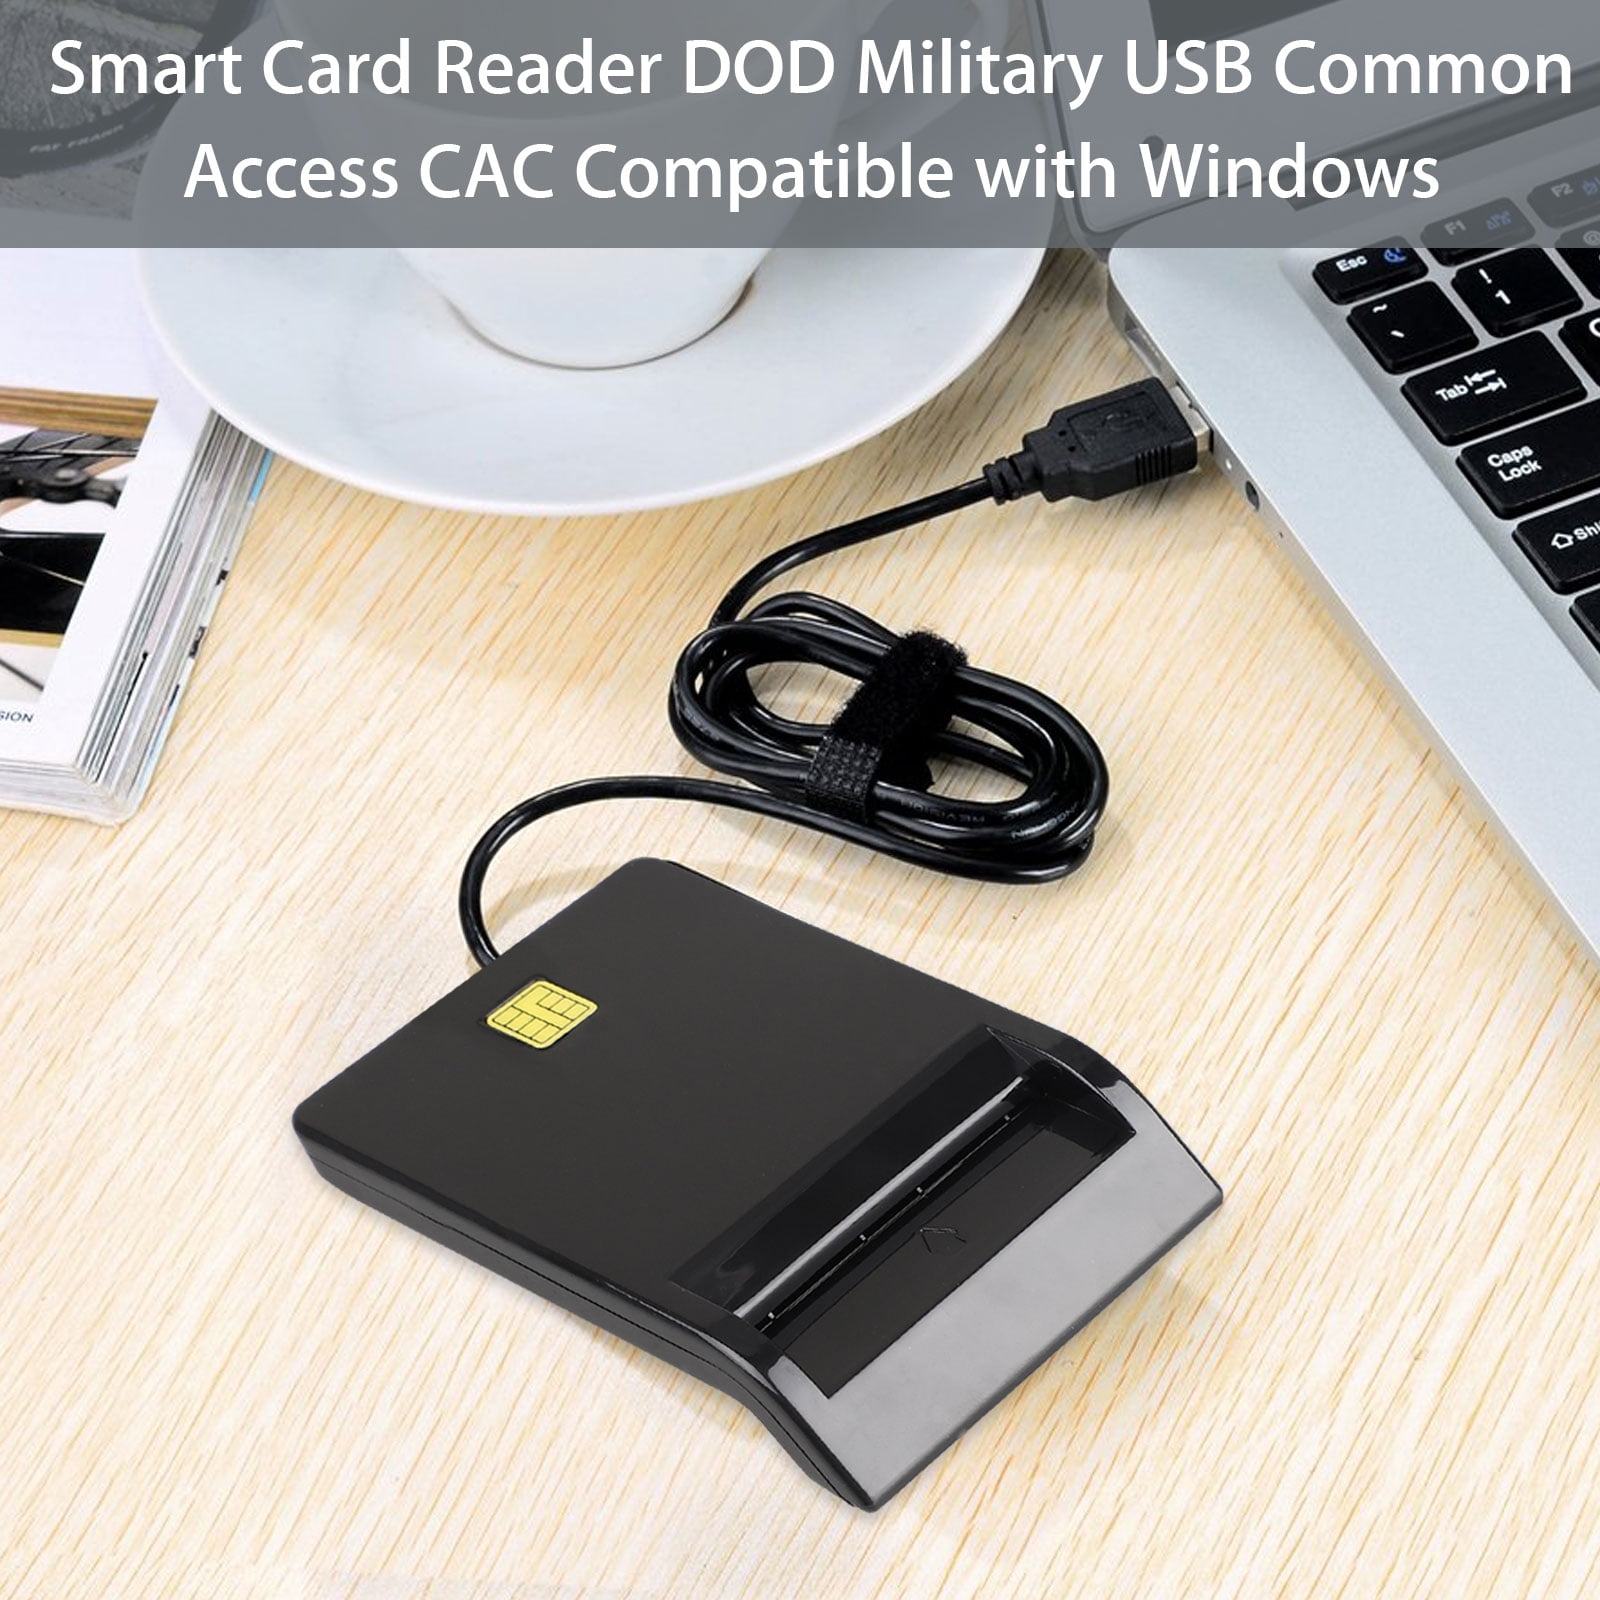 Personalausweis Kartenlesegerät Dual Slots USB Chipkartenlesegerät für DOD Military USB Common Access CAC/SIM/ID/IC Bank/Chip-Karte Smartcard Reader Kompatibel mit Windows/Vista/Mac OS E-Tax 